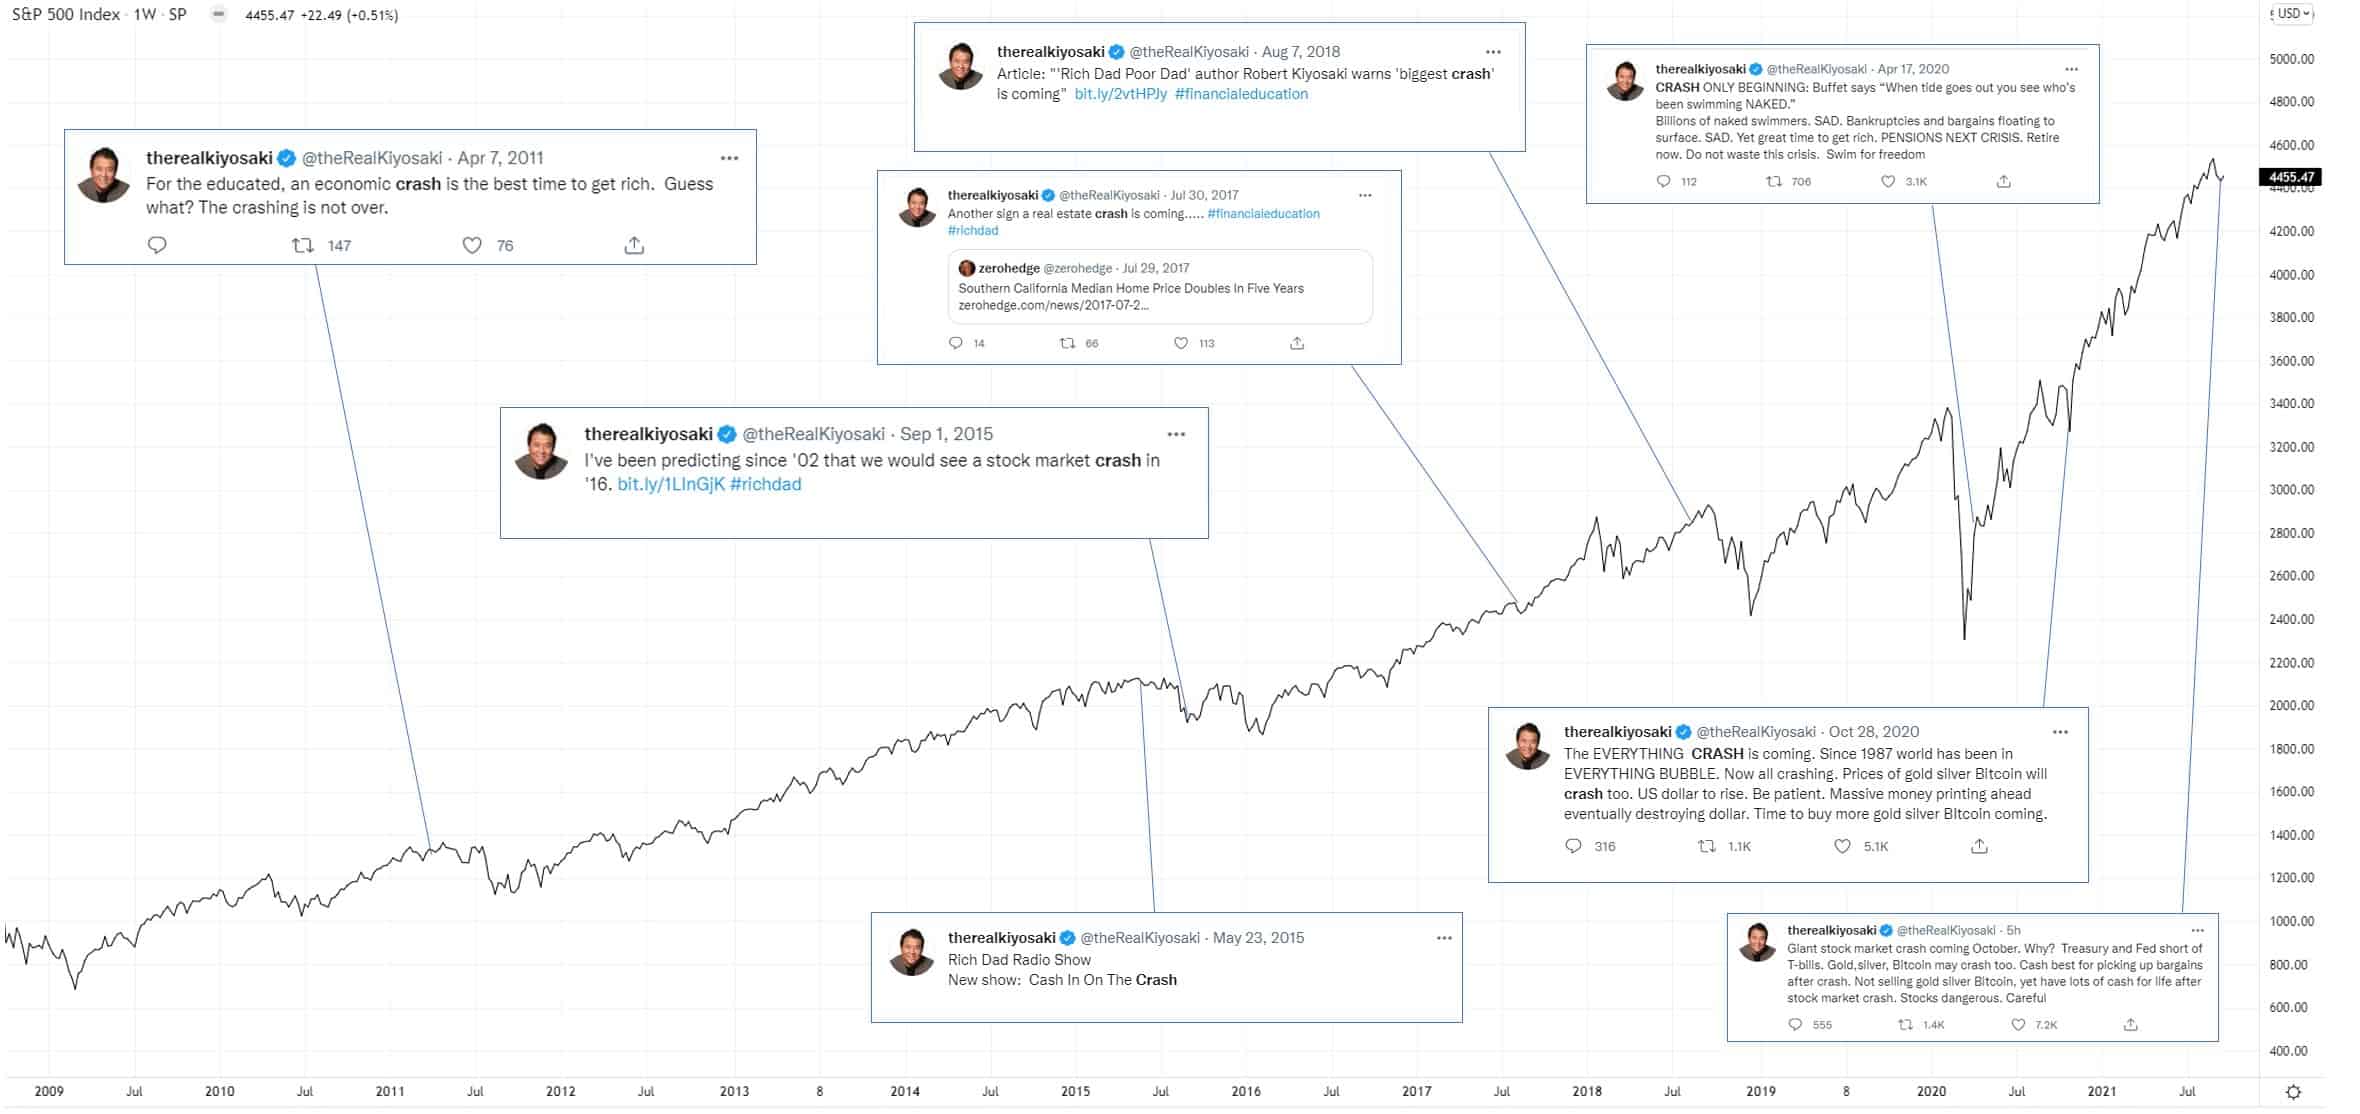 Timeline of Robert Kiyosaki tweets calling for a crash.